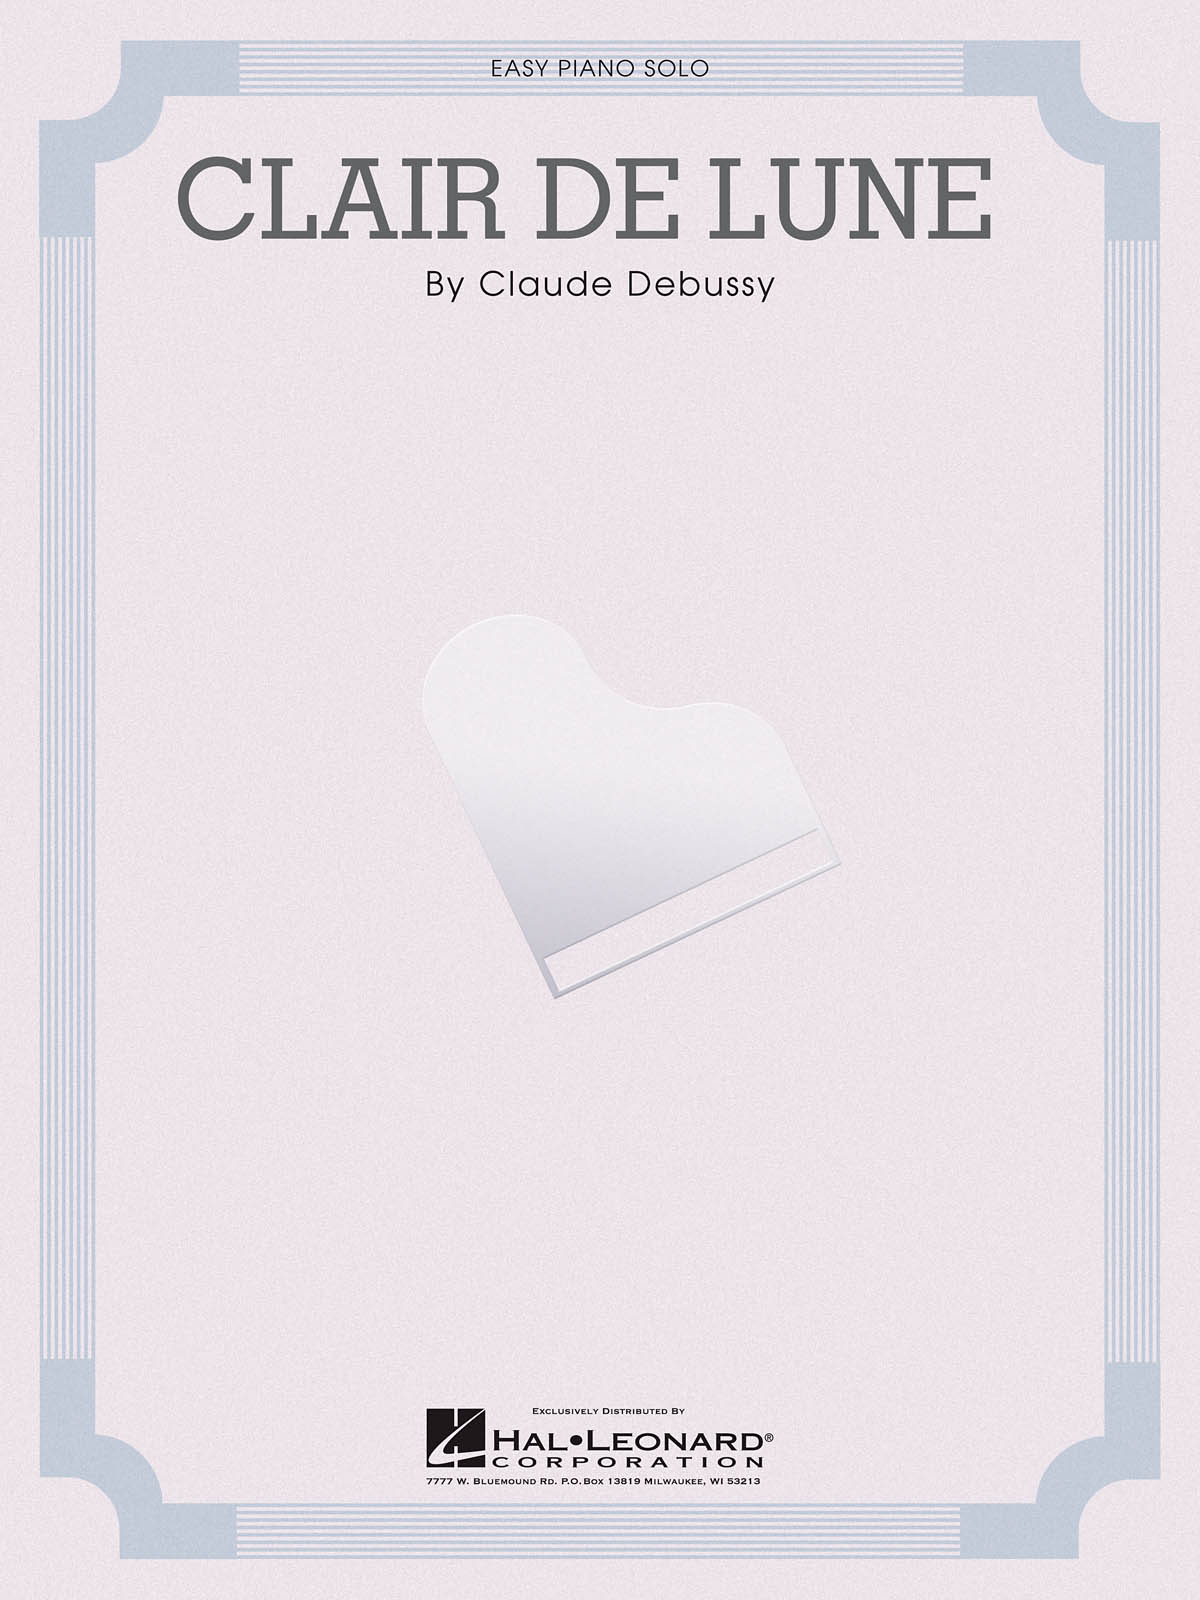 CLAIR DE LUNE(Easy Piano Solo)